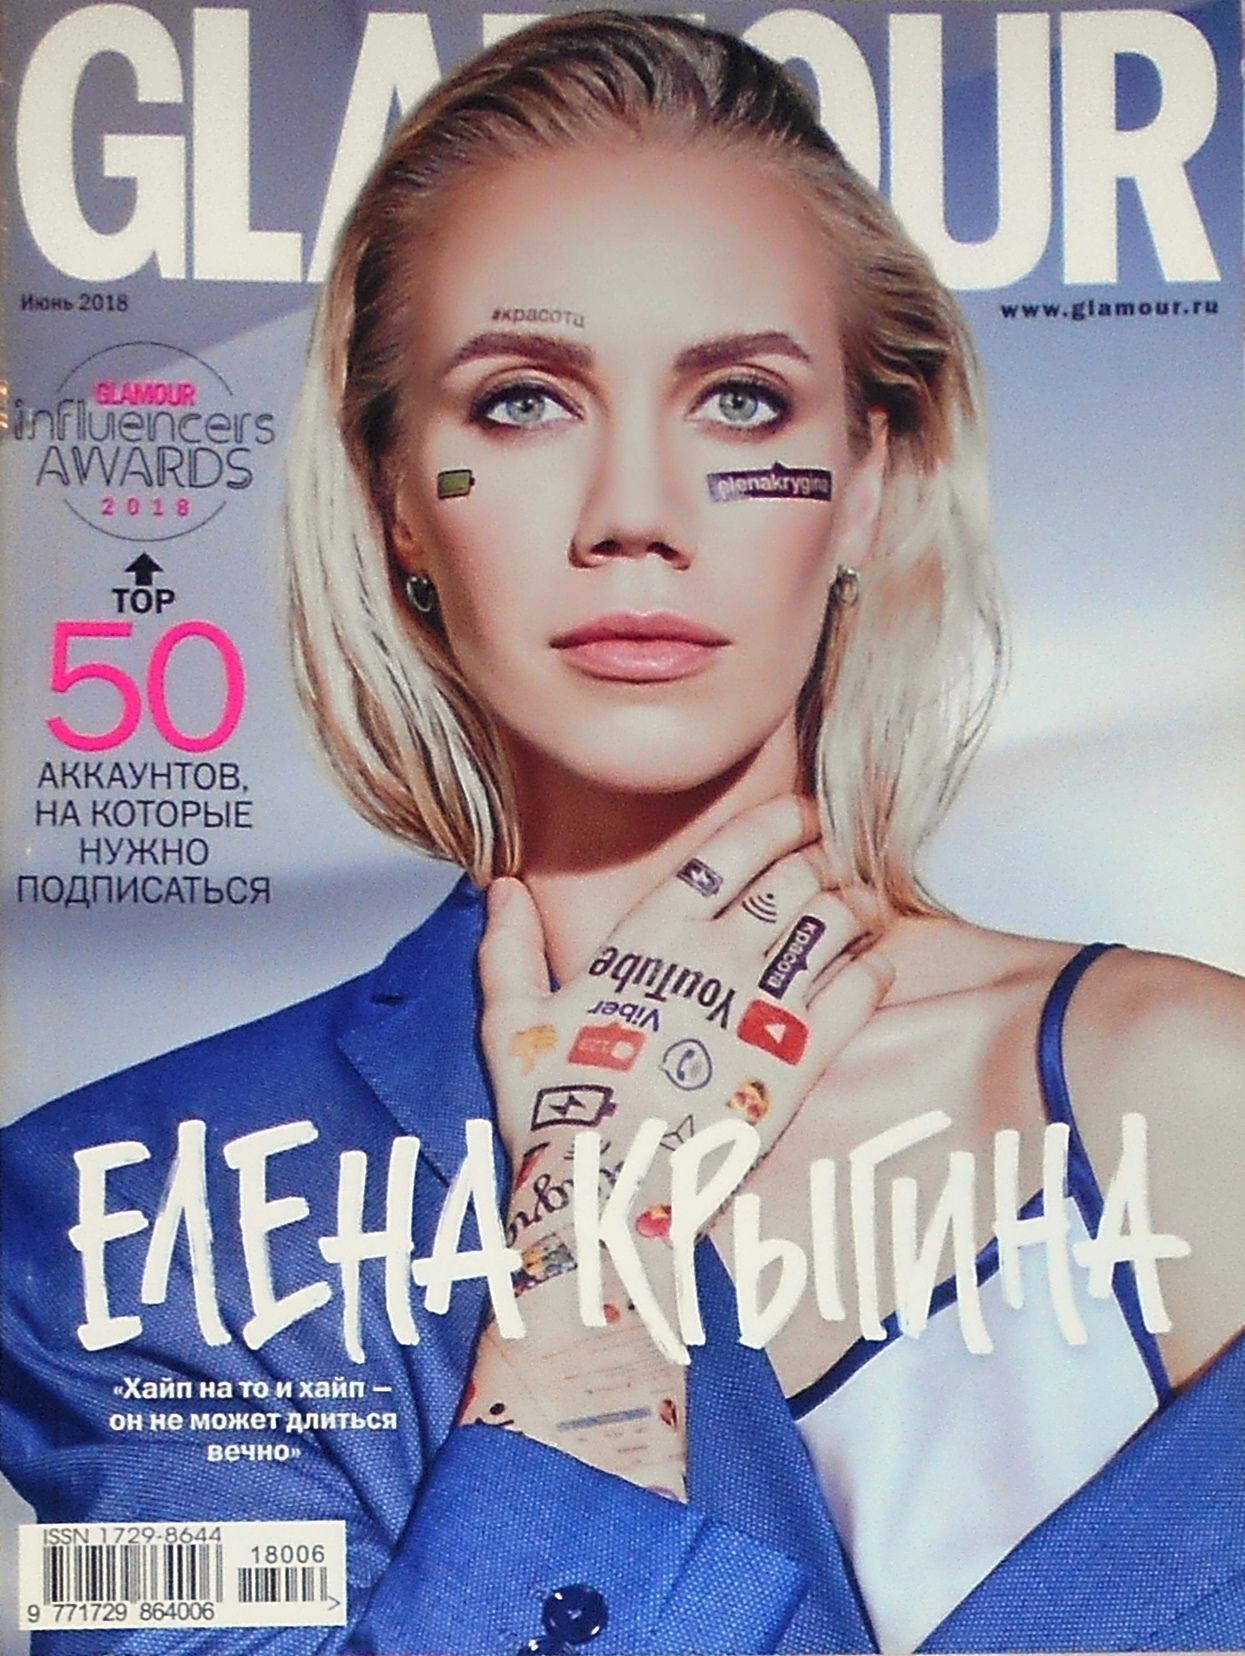 Glamour журнал. Журнал гламур. Гламур обложка. Гламурный журнал обложка.